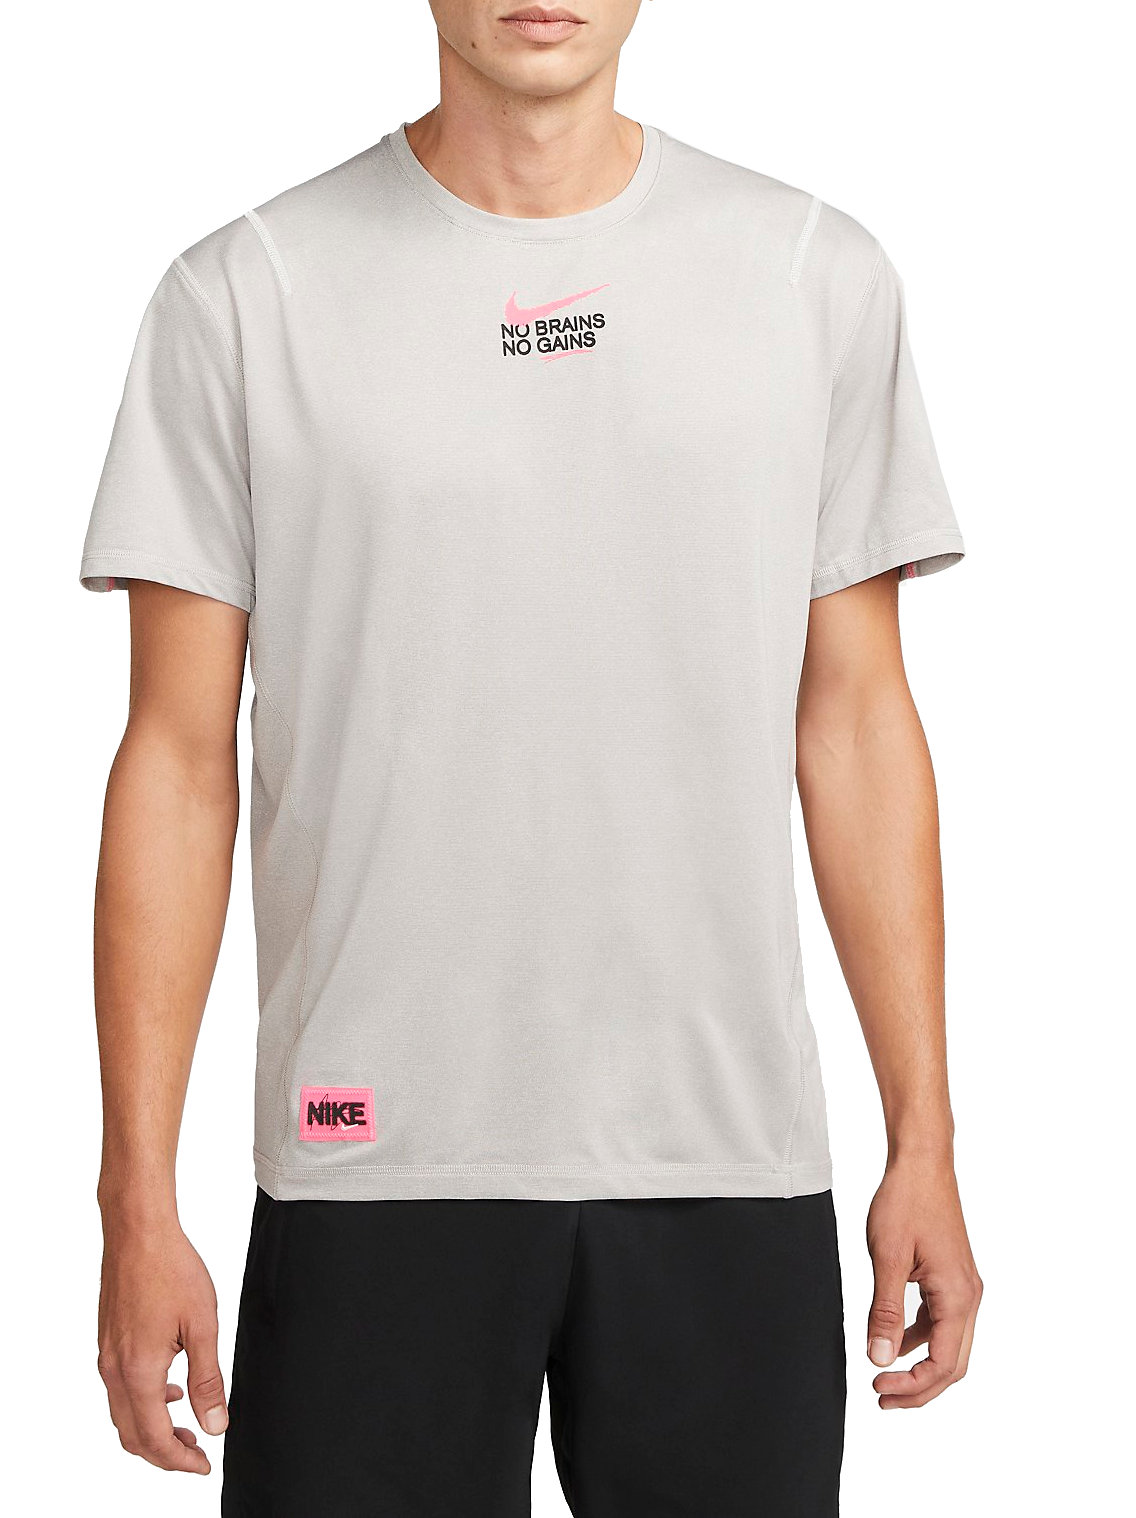 T-Shirt Nike Dri-FIT D.Y.E. Men s Short-Sleeve Fitness Top